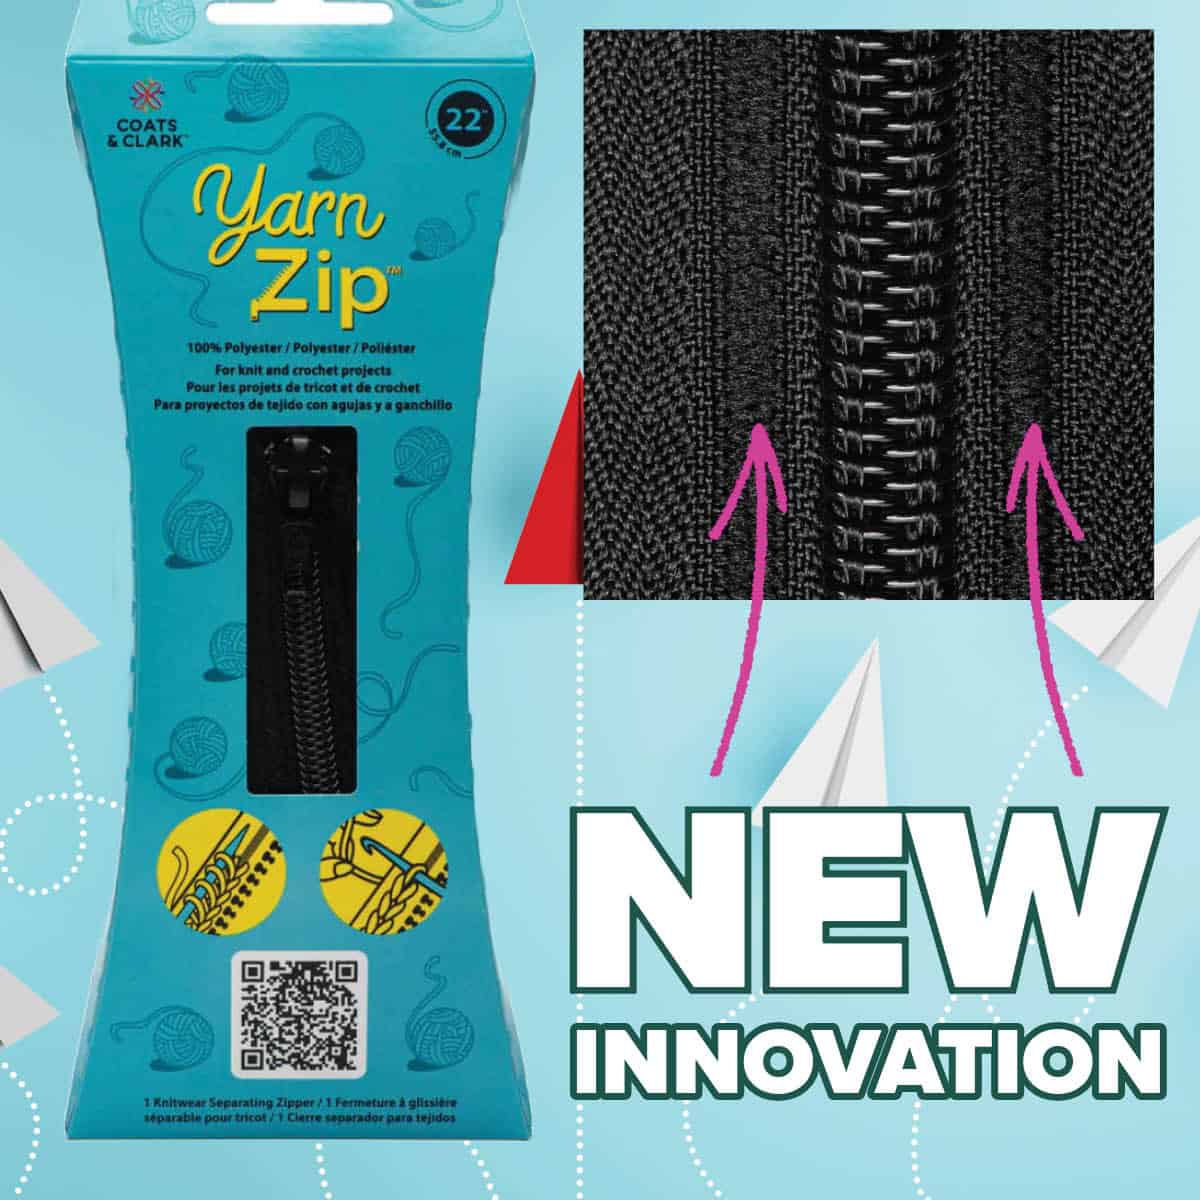 New Yarn Zip Product by Coats & Clark